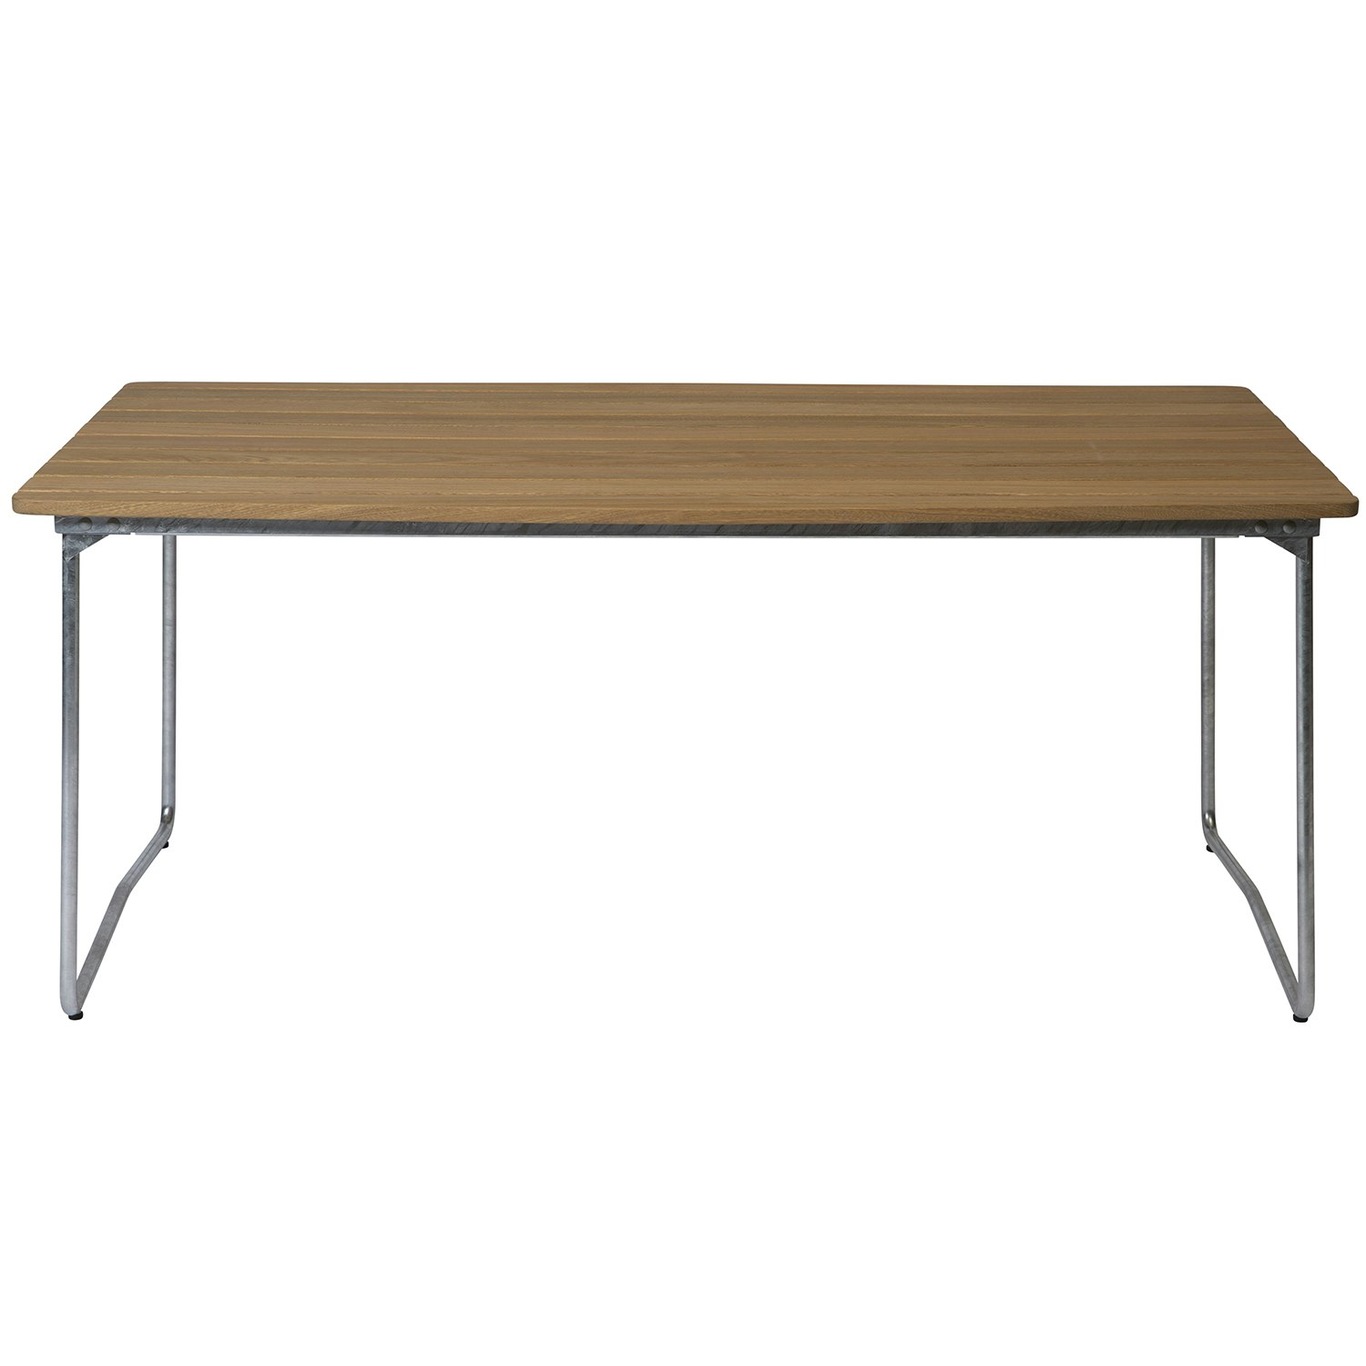 B31 Table 92x170 cm, Oiled Oak / Hot Galvanized Steel